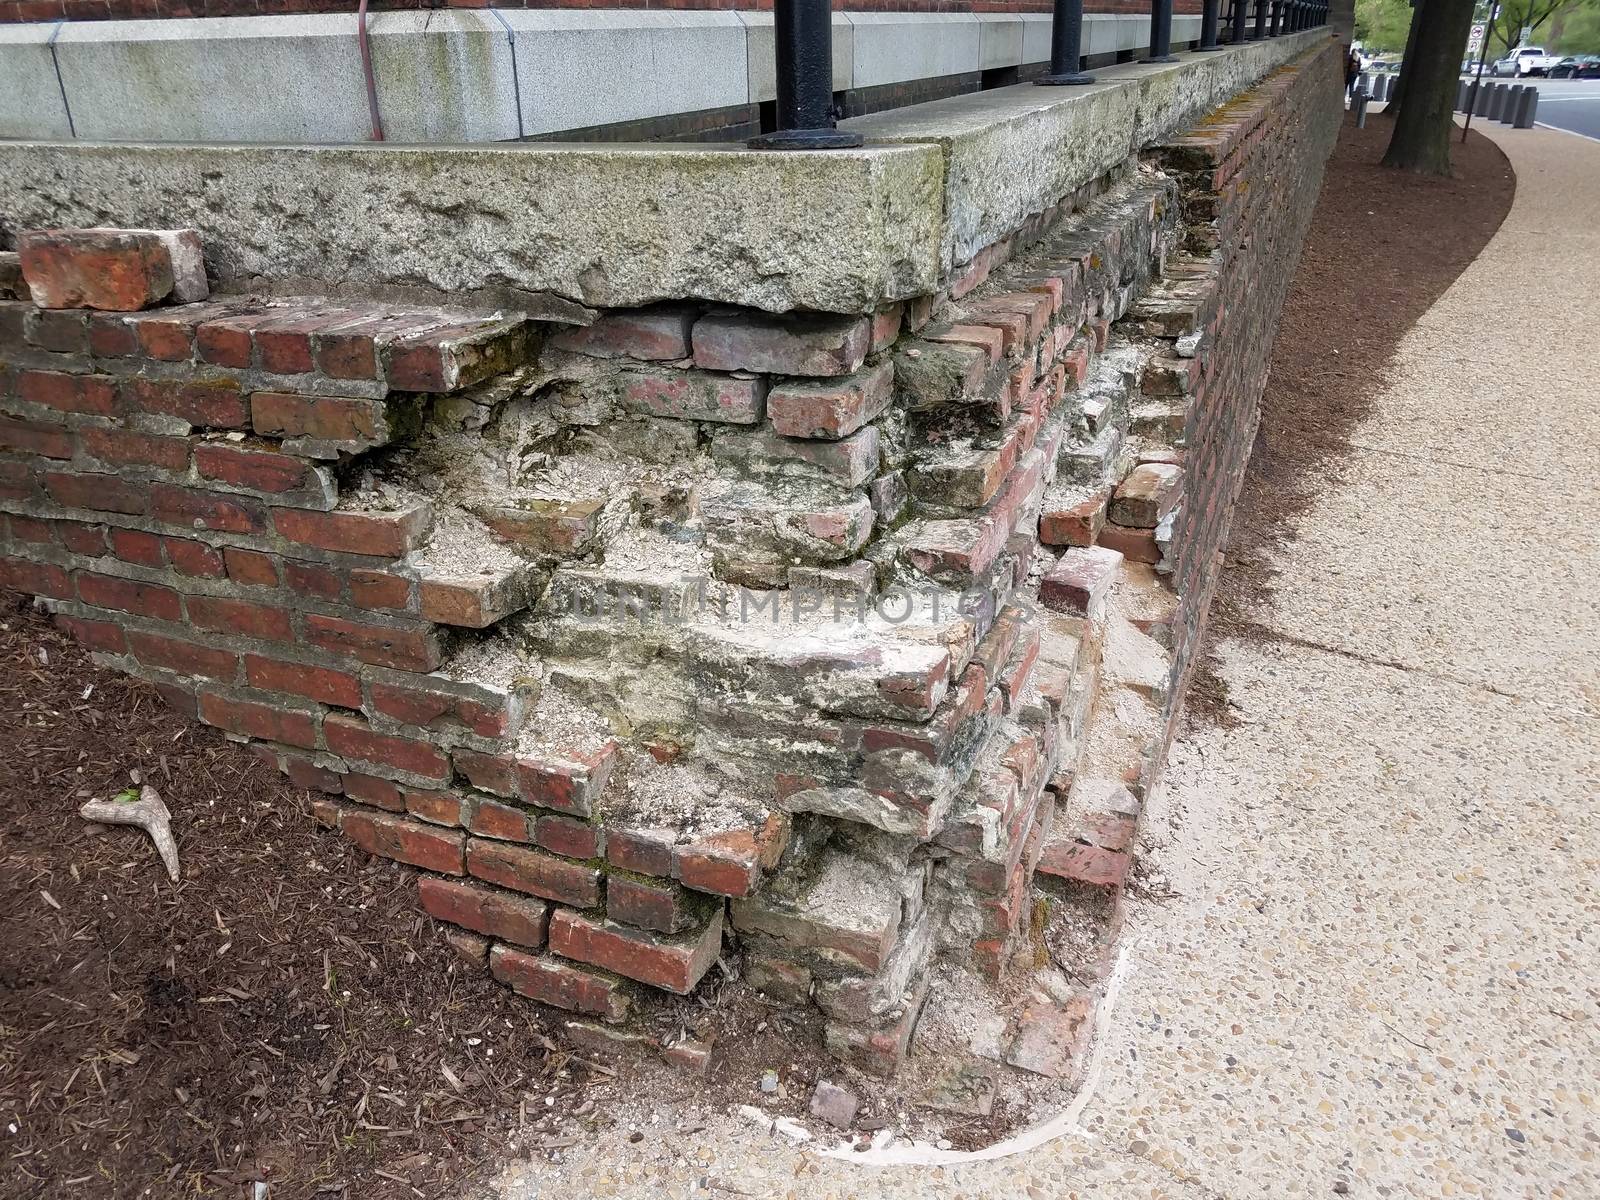 broken or damaged brick wall with cement sidewalk by stockphotofan1